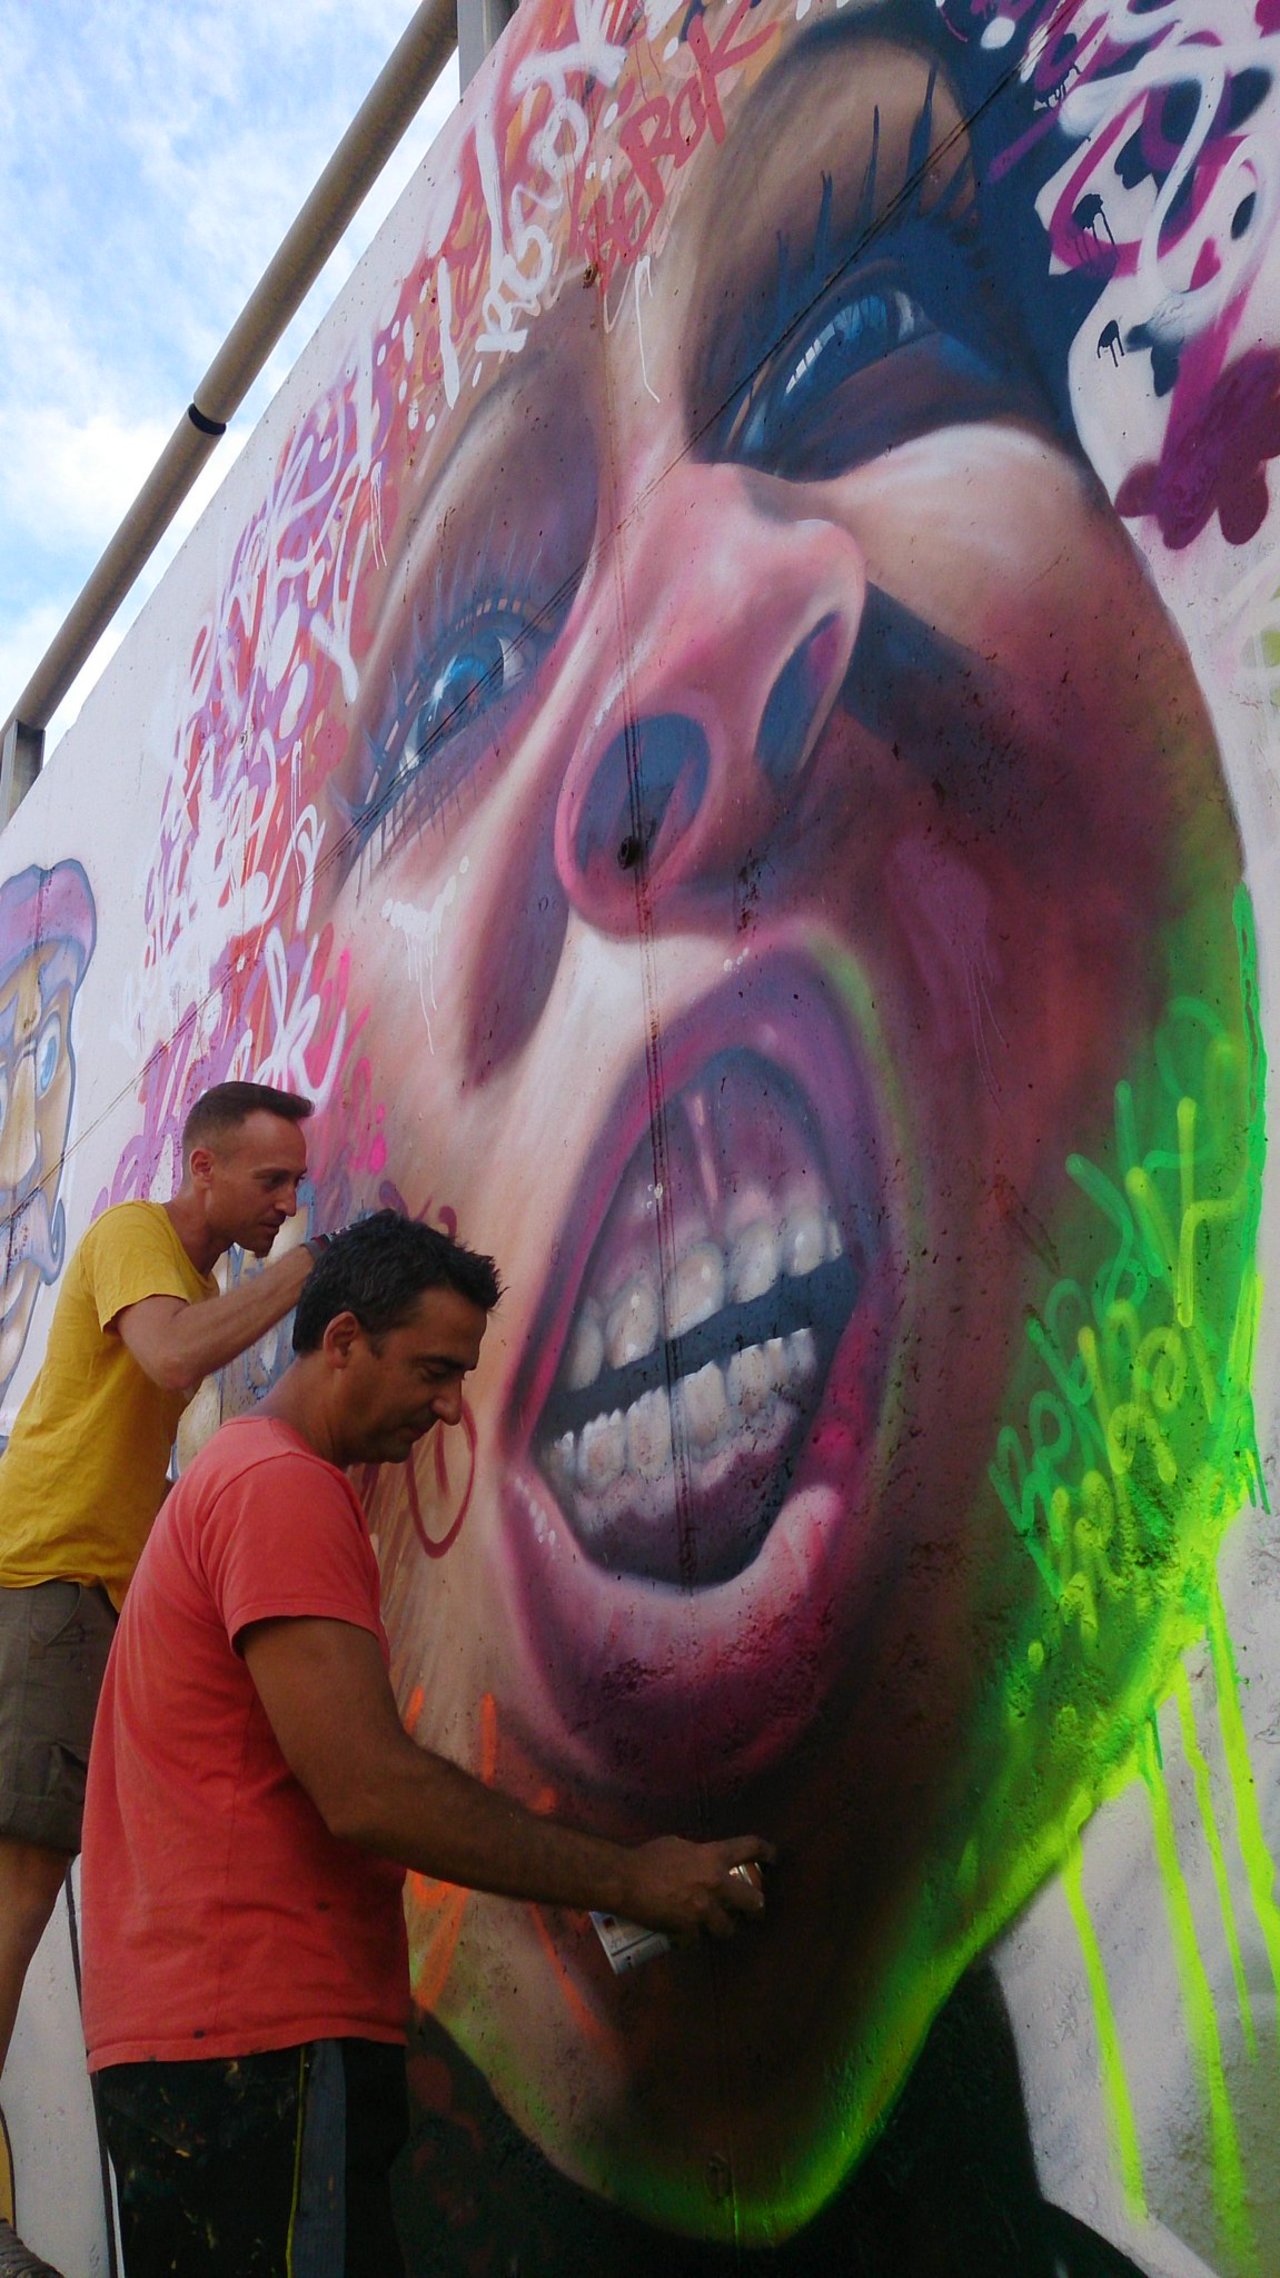 RT @Berokone: #graffiti #mural #arteurbano #urbanart #streetart #graffitis #berok #murales #artist #santadriadelbesos #izan #arte http://t.co/VY8g137InN